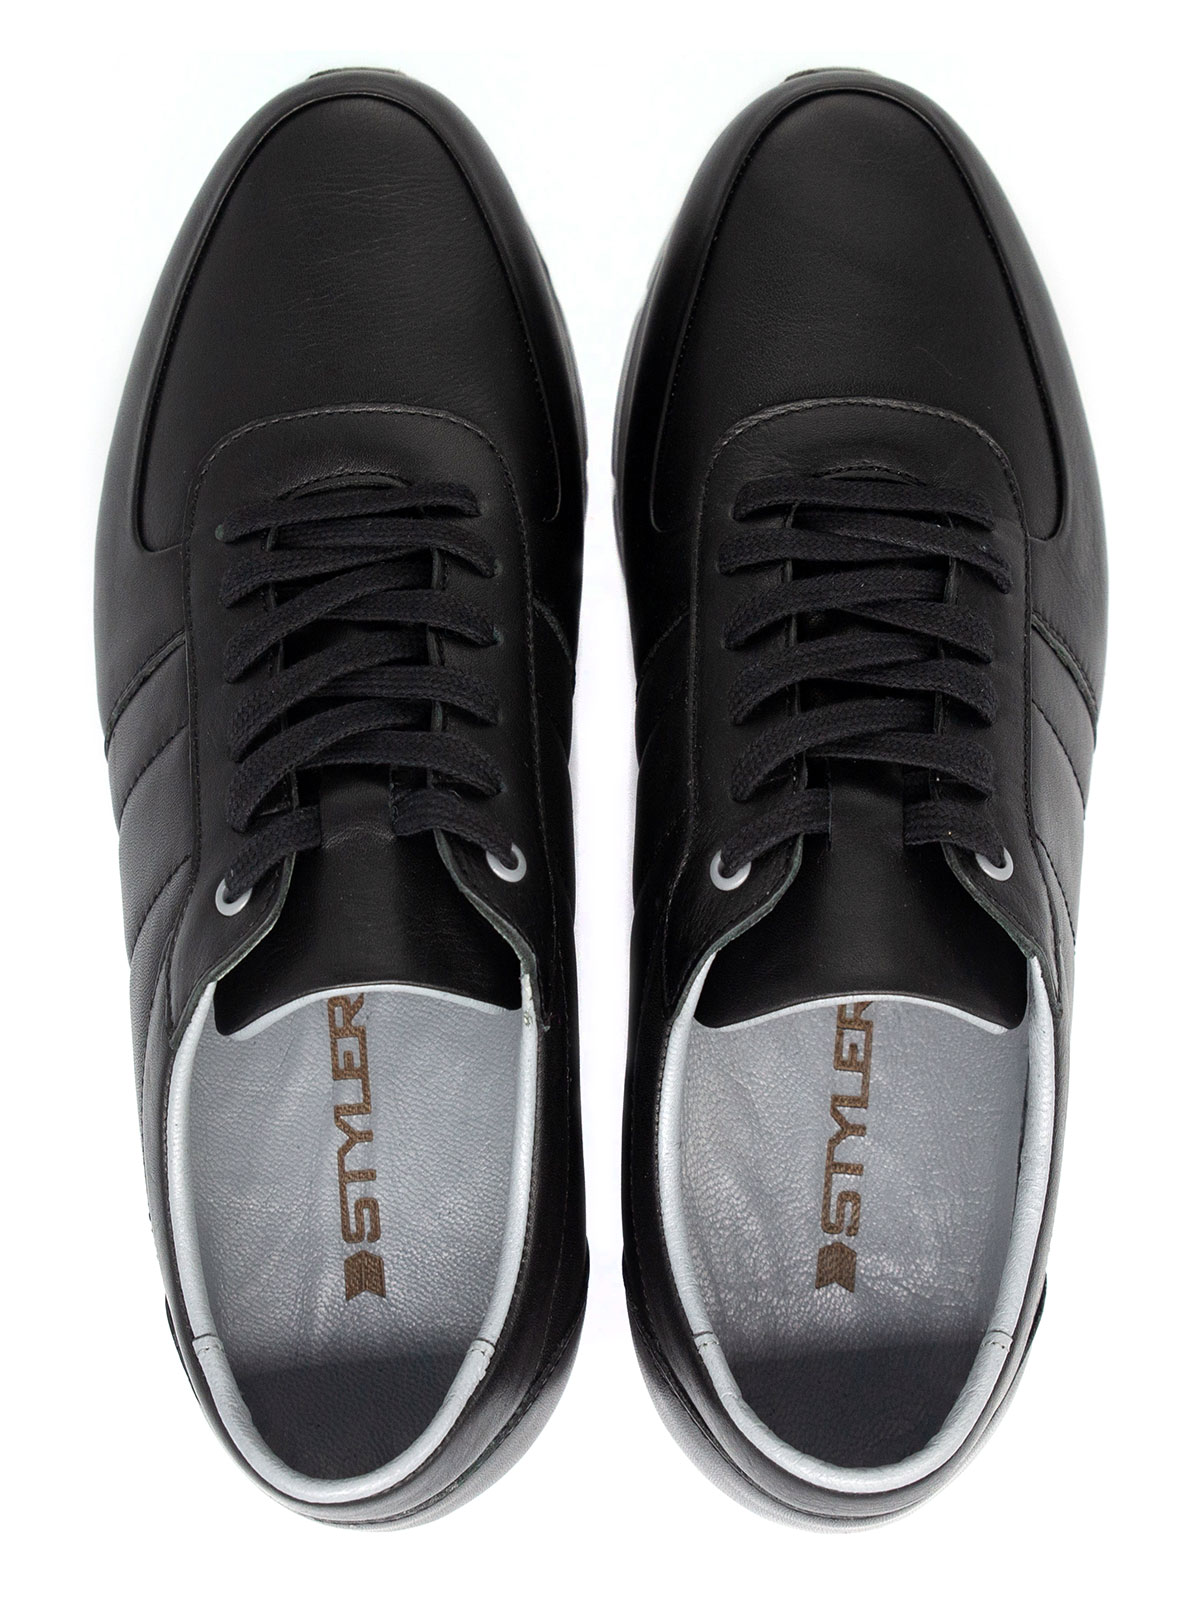 Pantofi sport din piele neagra - 81100 - € 41.62 img2